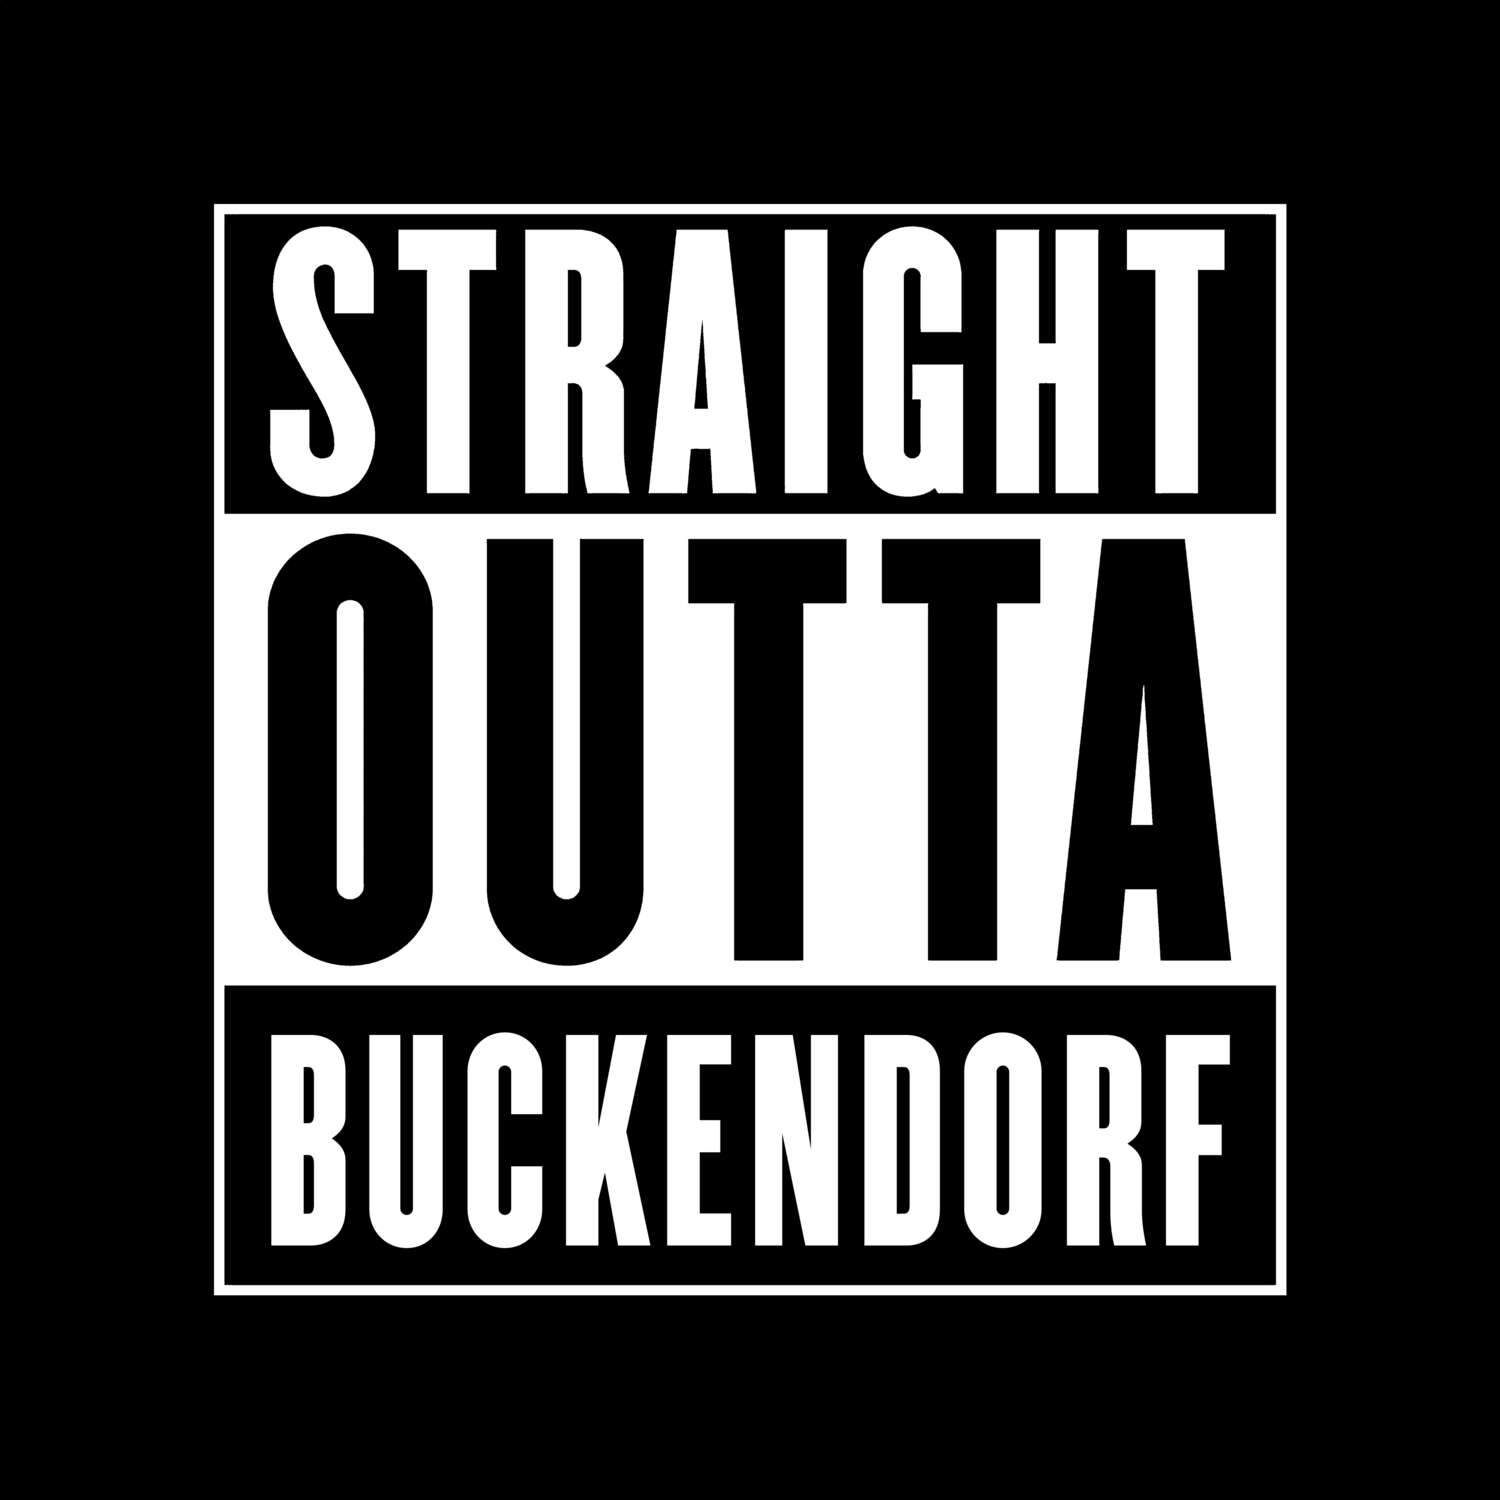 Buckendorf T-Shirt »Straight Outta«